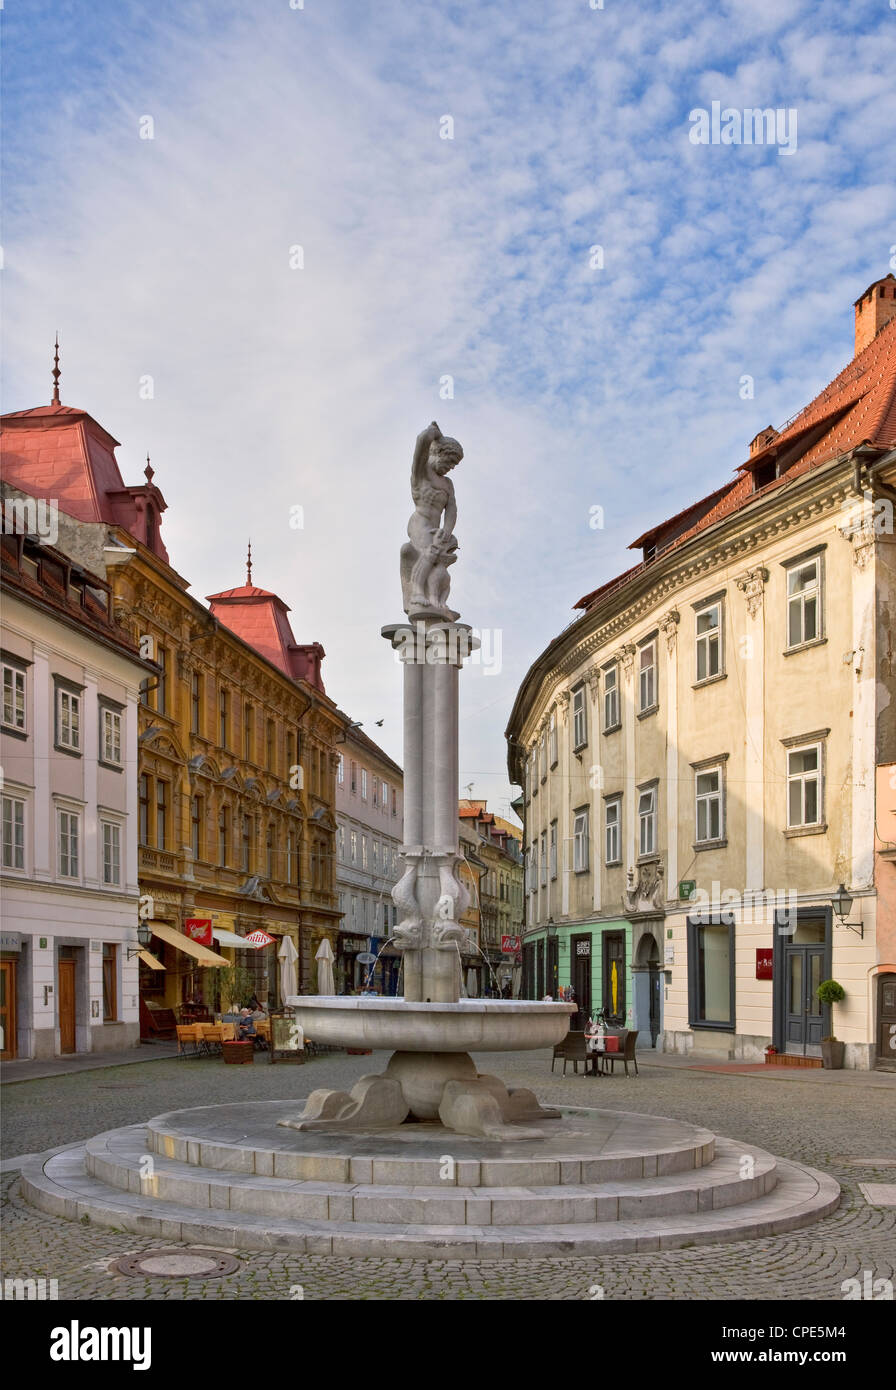 Hercules Fountain at Stari trg square in medieval Ljulbjana, Slovenia, Europe Stock Photo